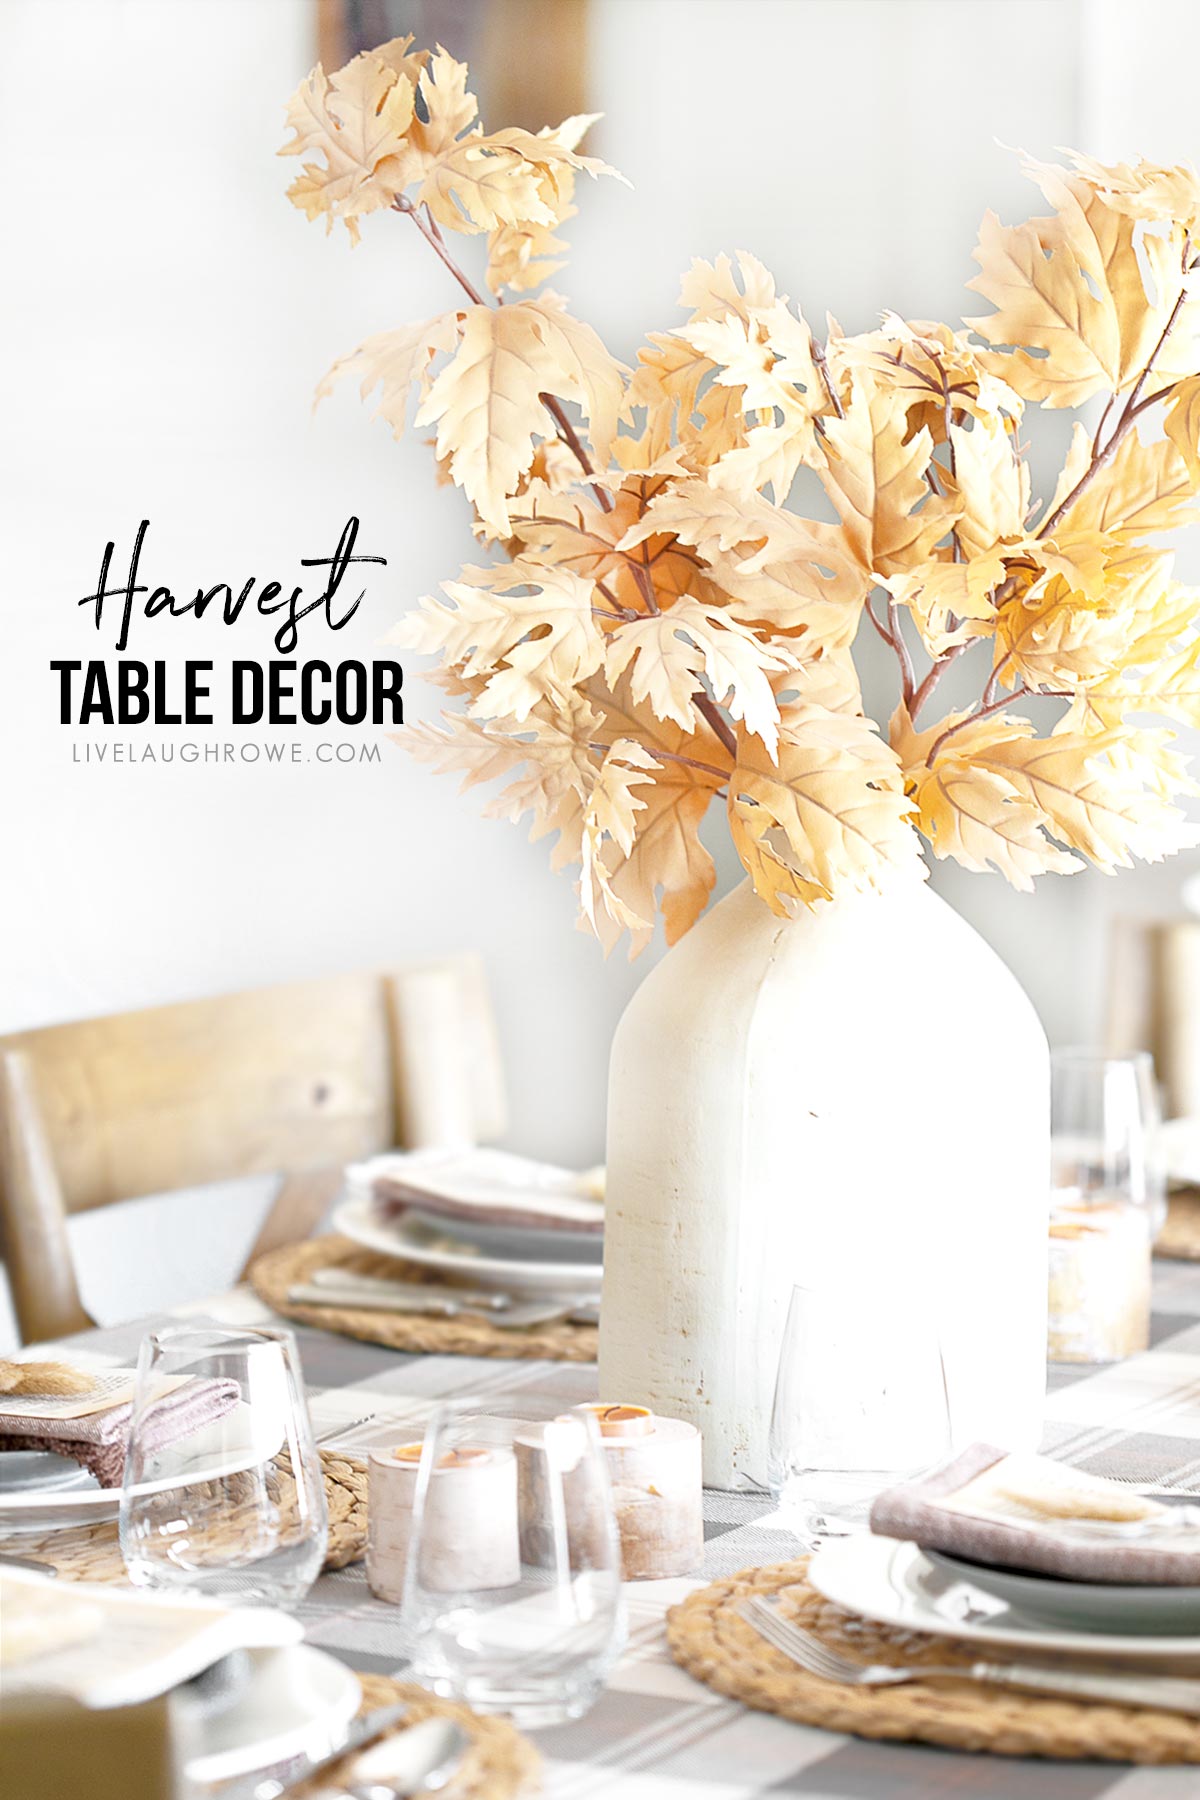 Harvest Table Decor